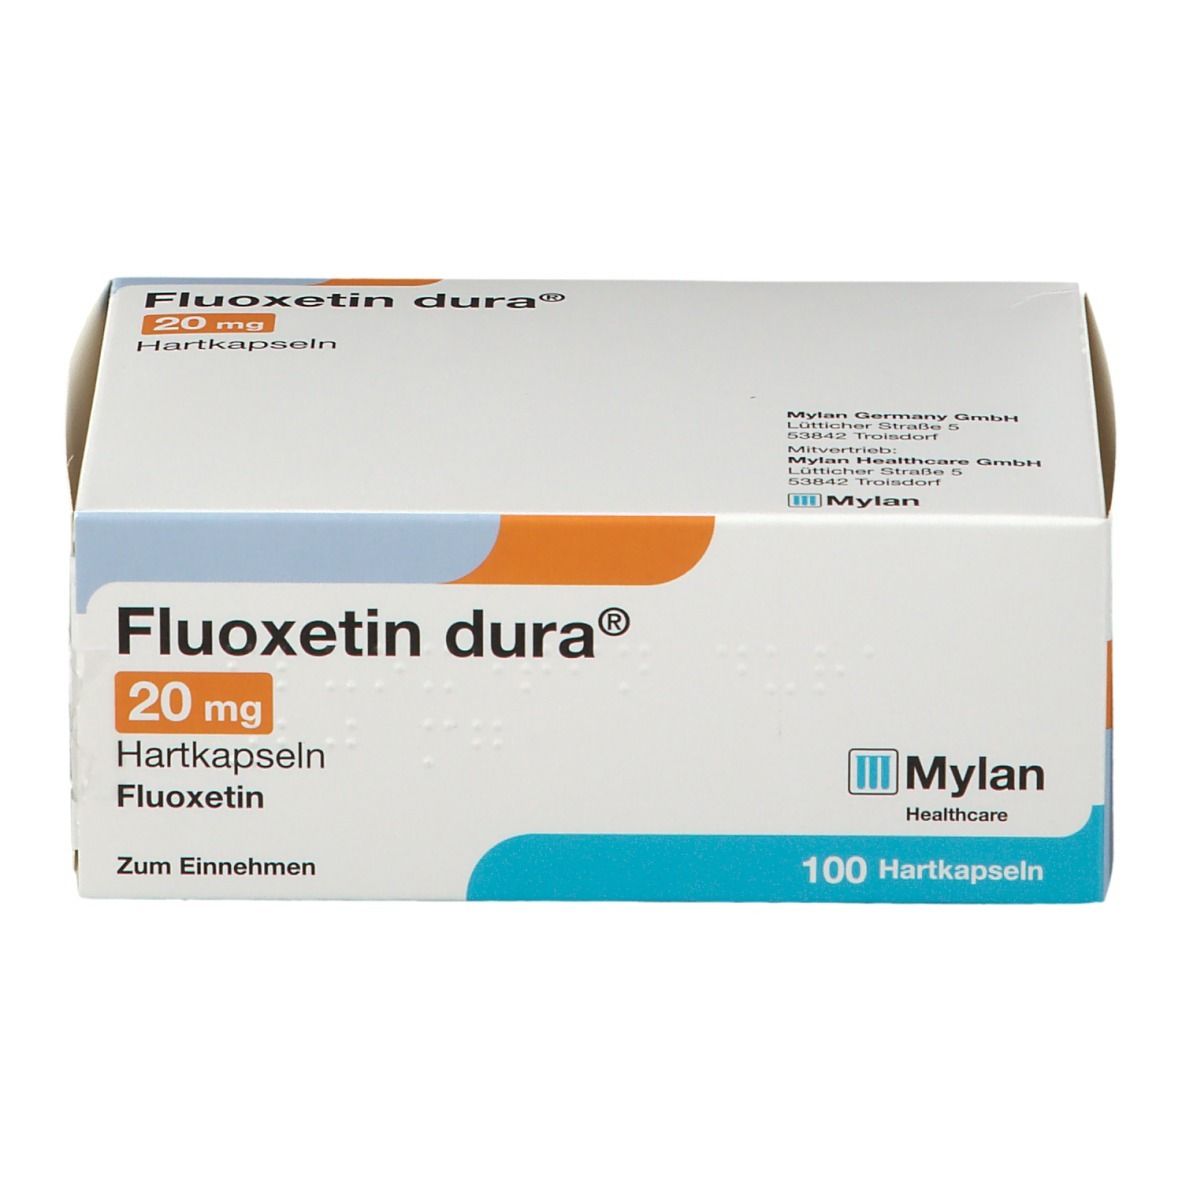 Fluoxetin dura® 20 mg